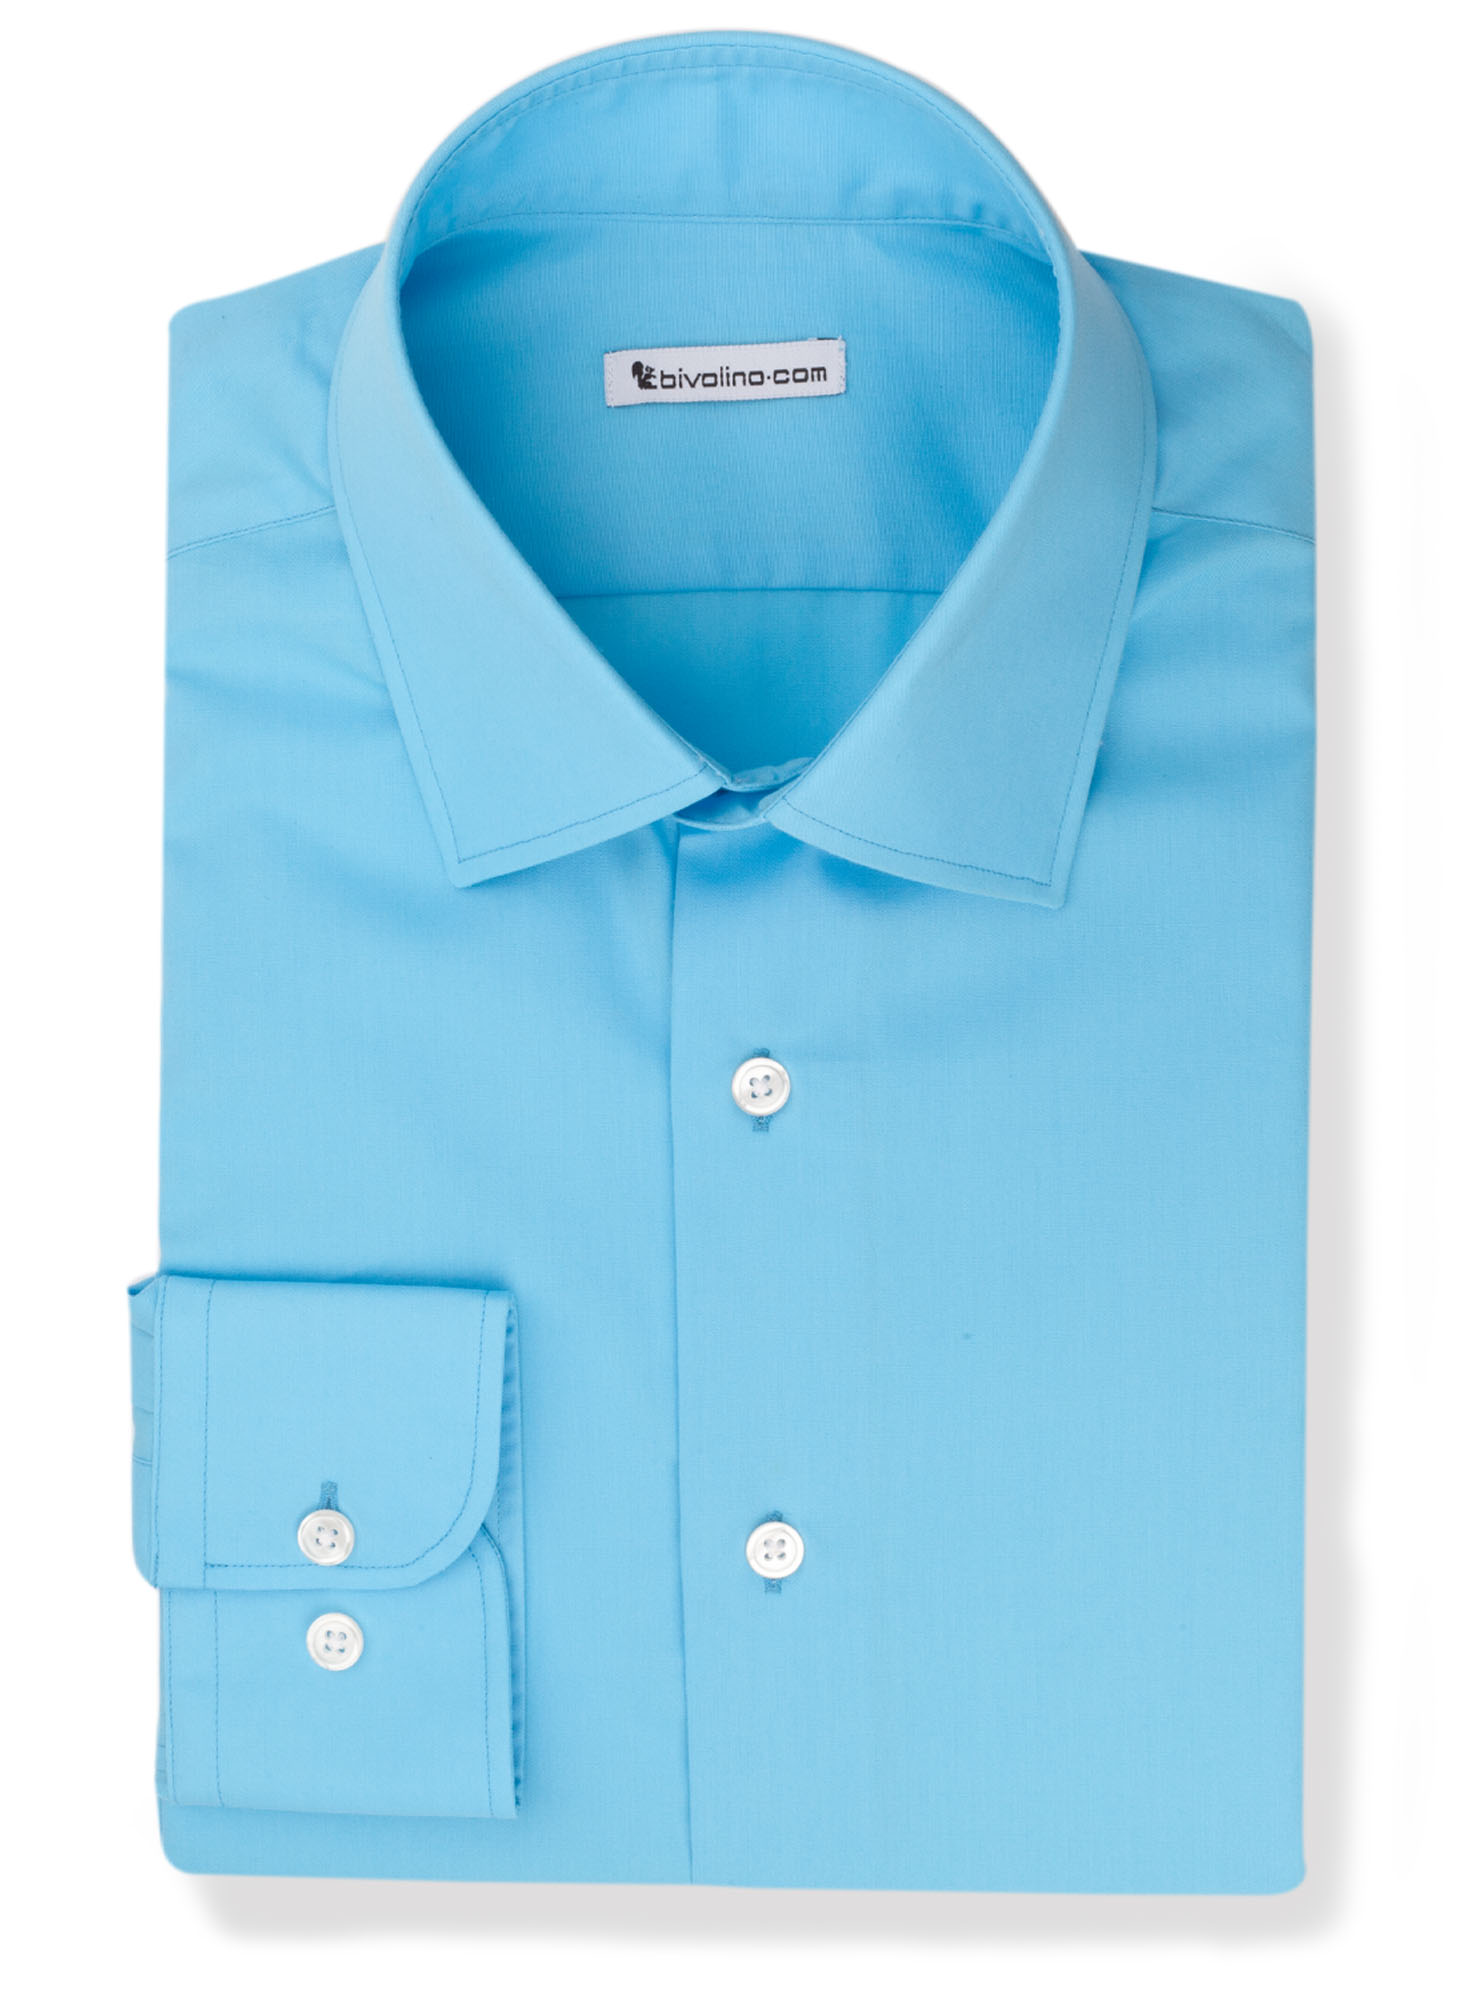 PERFO - Turquoise popeline easy-care overhemd - Brise 3 Top Merken Winkel